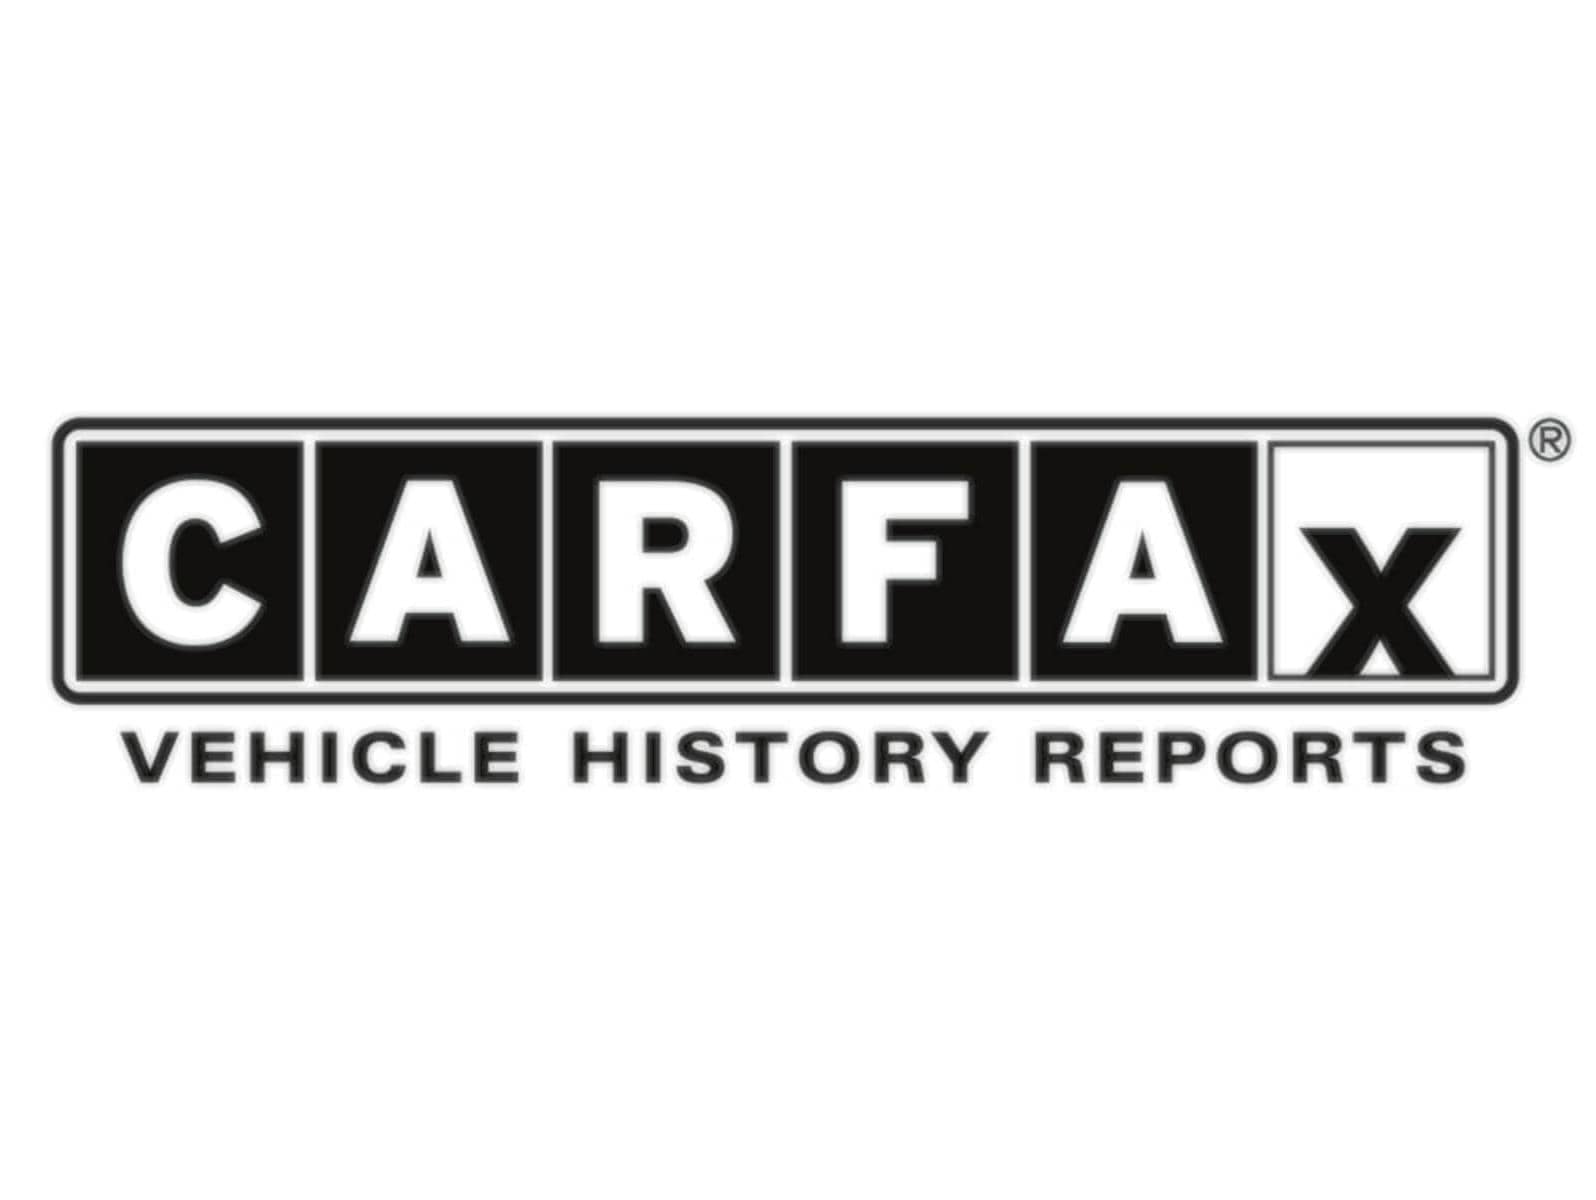 Carfax logo. Vehicle History Reports